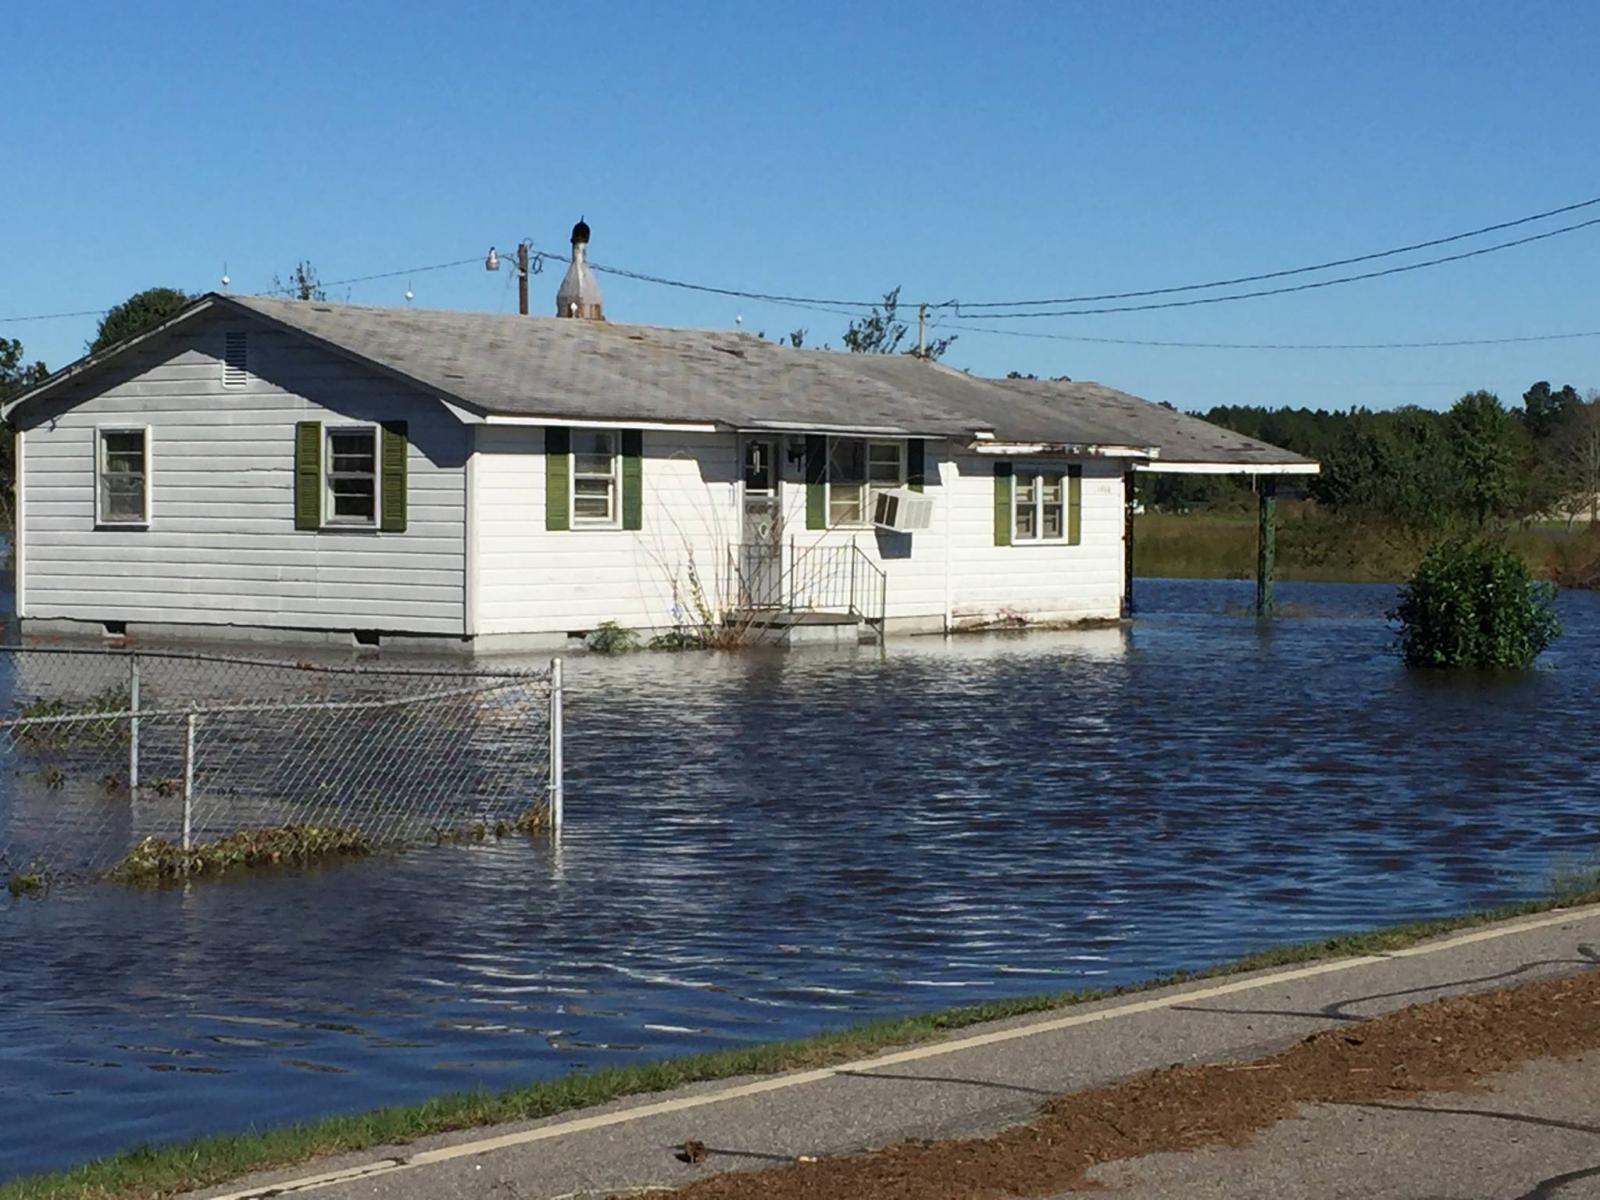 Flooding along Lovette Road a few miles south of Lumberton, NC